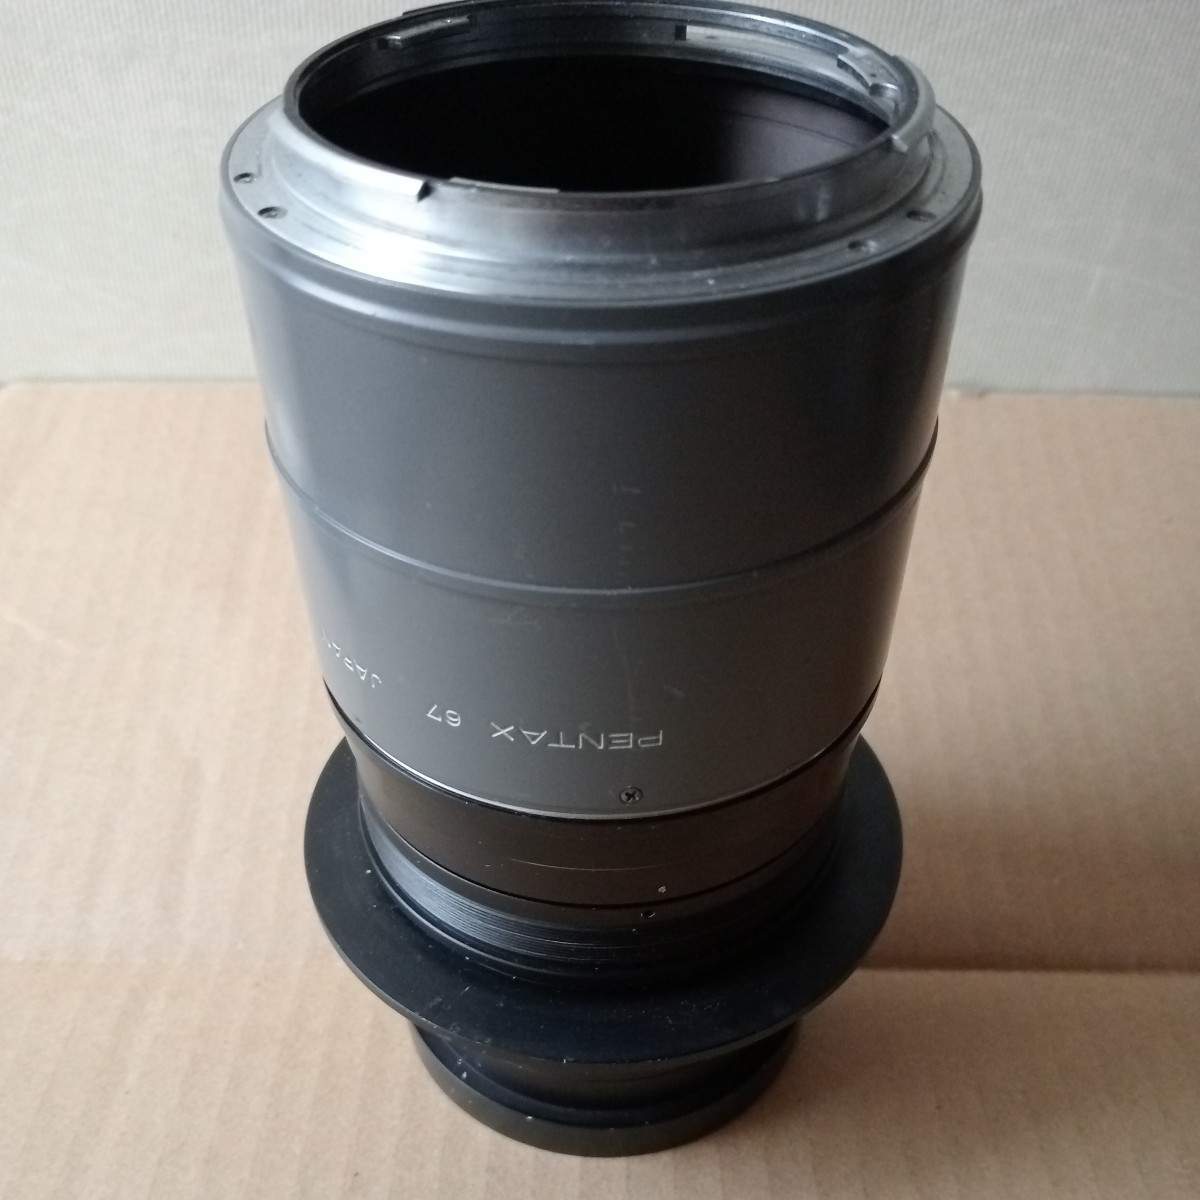  lens playing KONIKA HEXANON GRⅡ 9|300 present condition goods Pentax 67 mount 